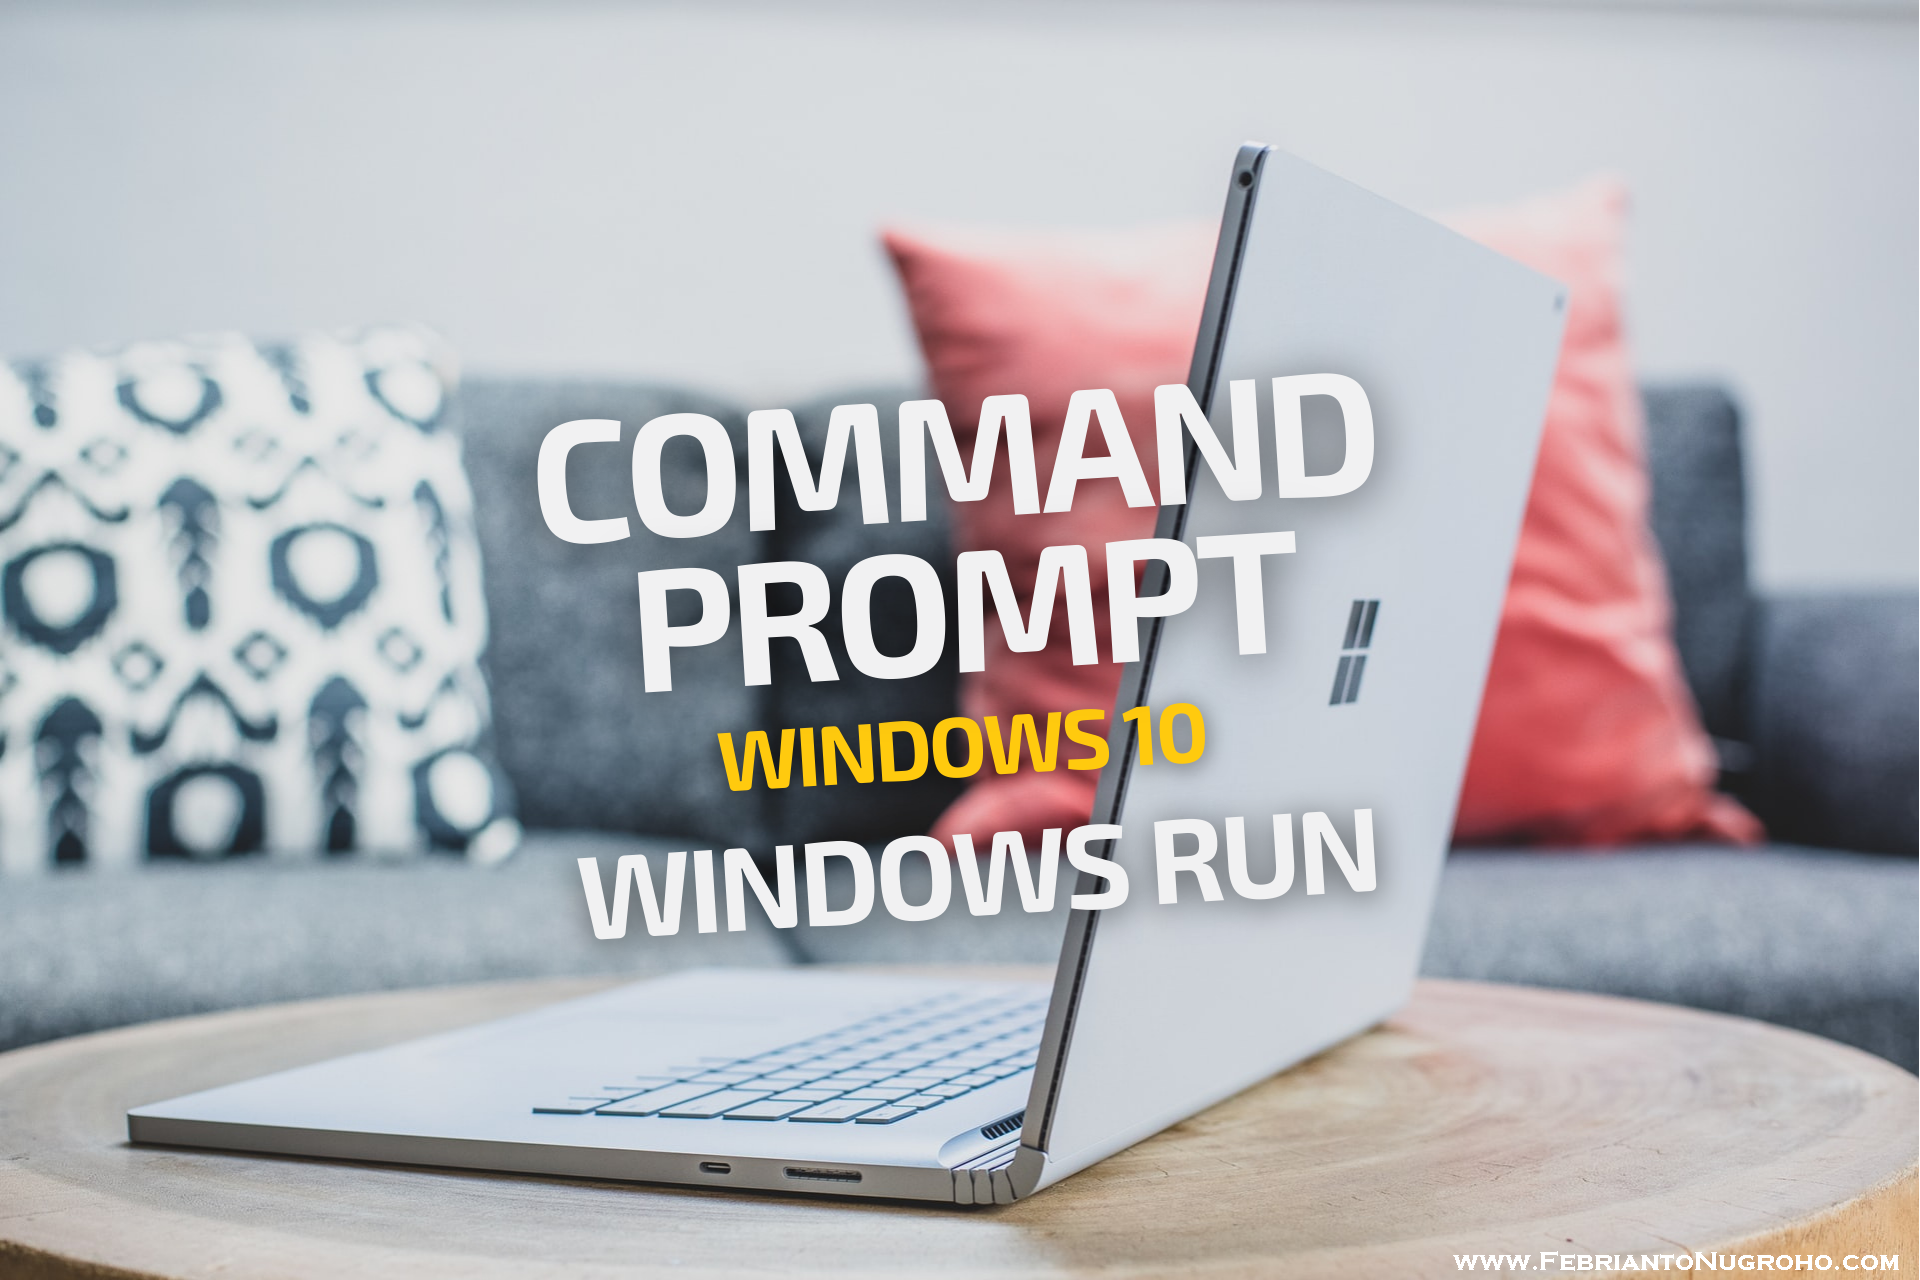 Membuka Command Prompt di Windows 10 via Windows Run